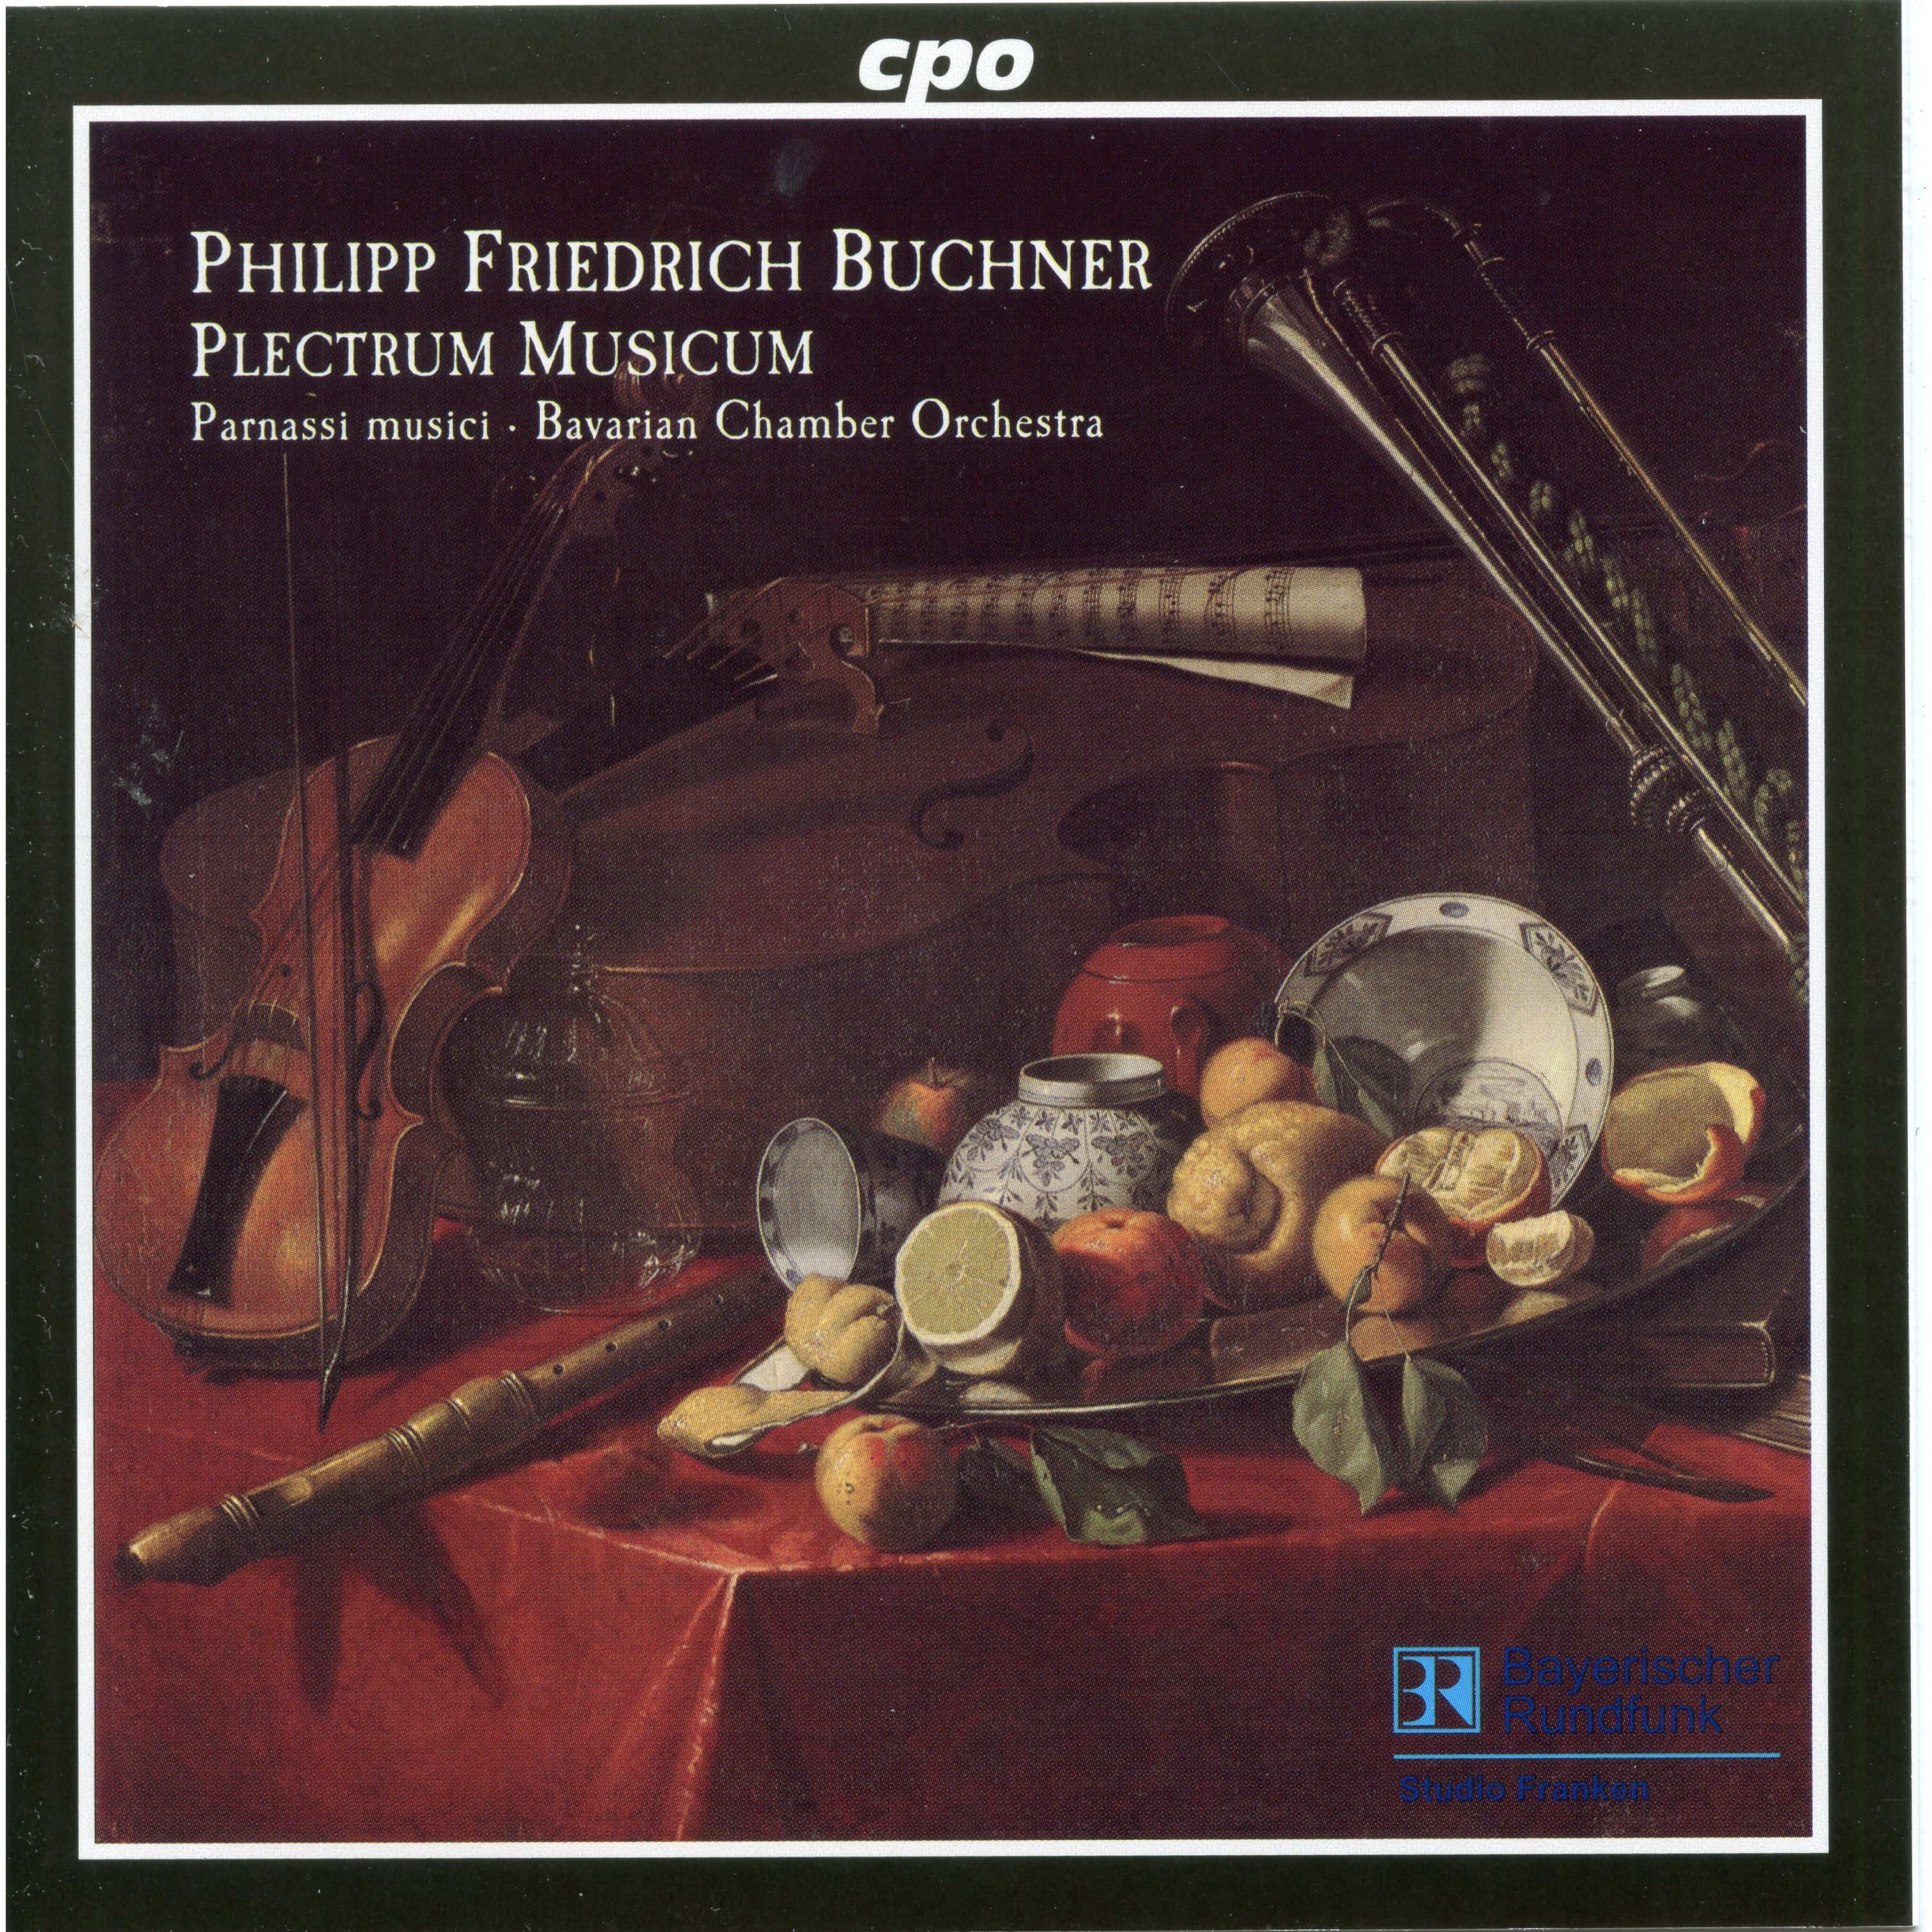 Buchner, Philipp - Plectrum musicum, Op. 4, 1662 (Excerpts) - Parnassi Musici